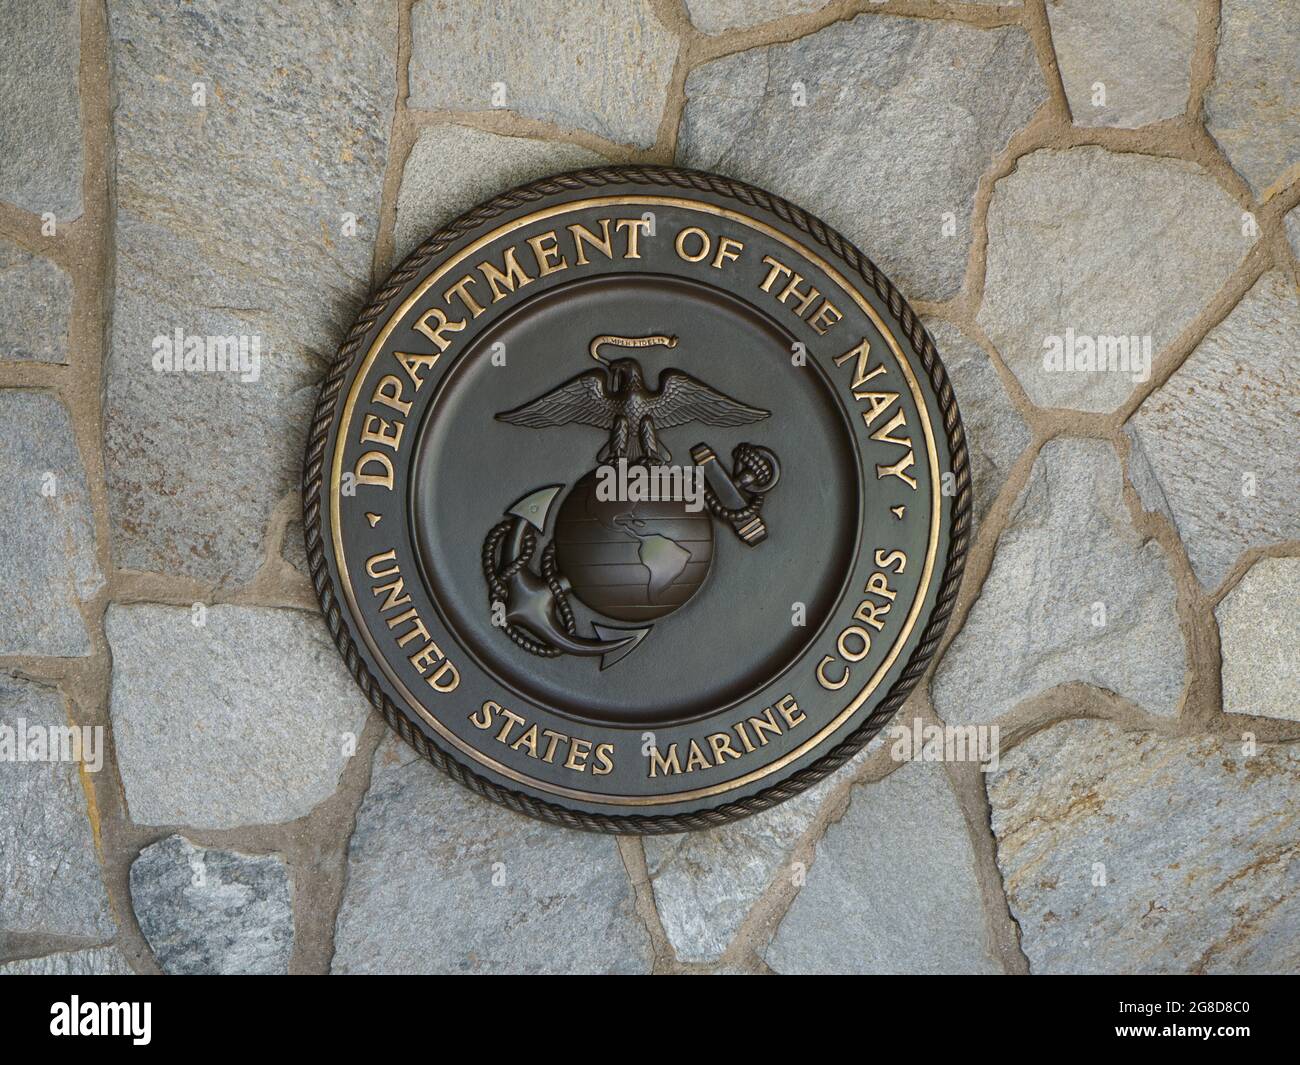 Riverside, California USA - June 16, 2021: U.S. Marine Corp seal, crest or plaque on flagstone background Stock Photo